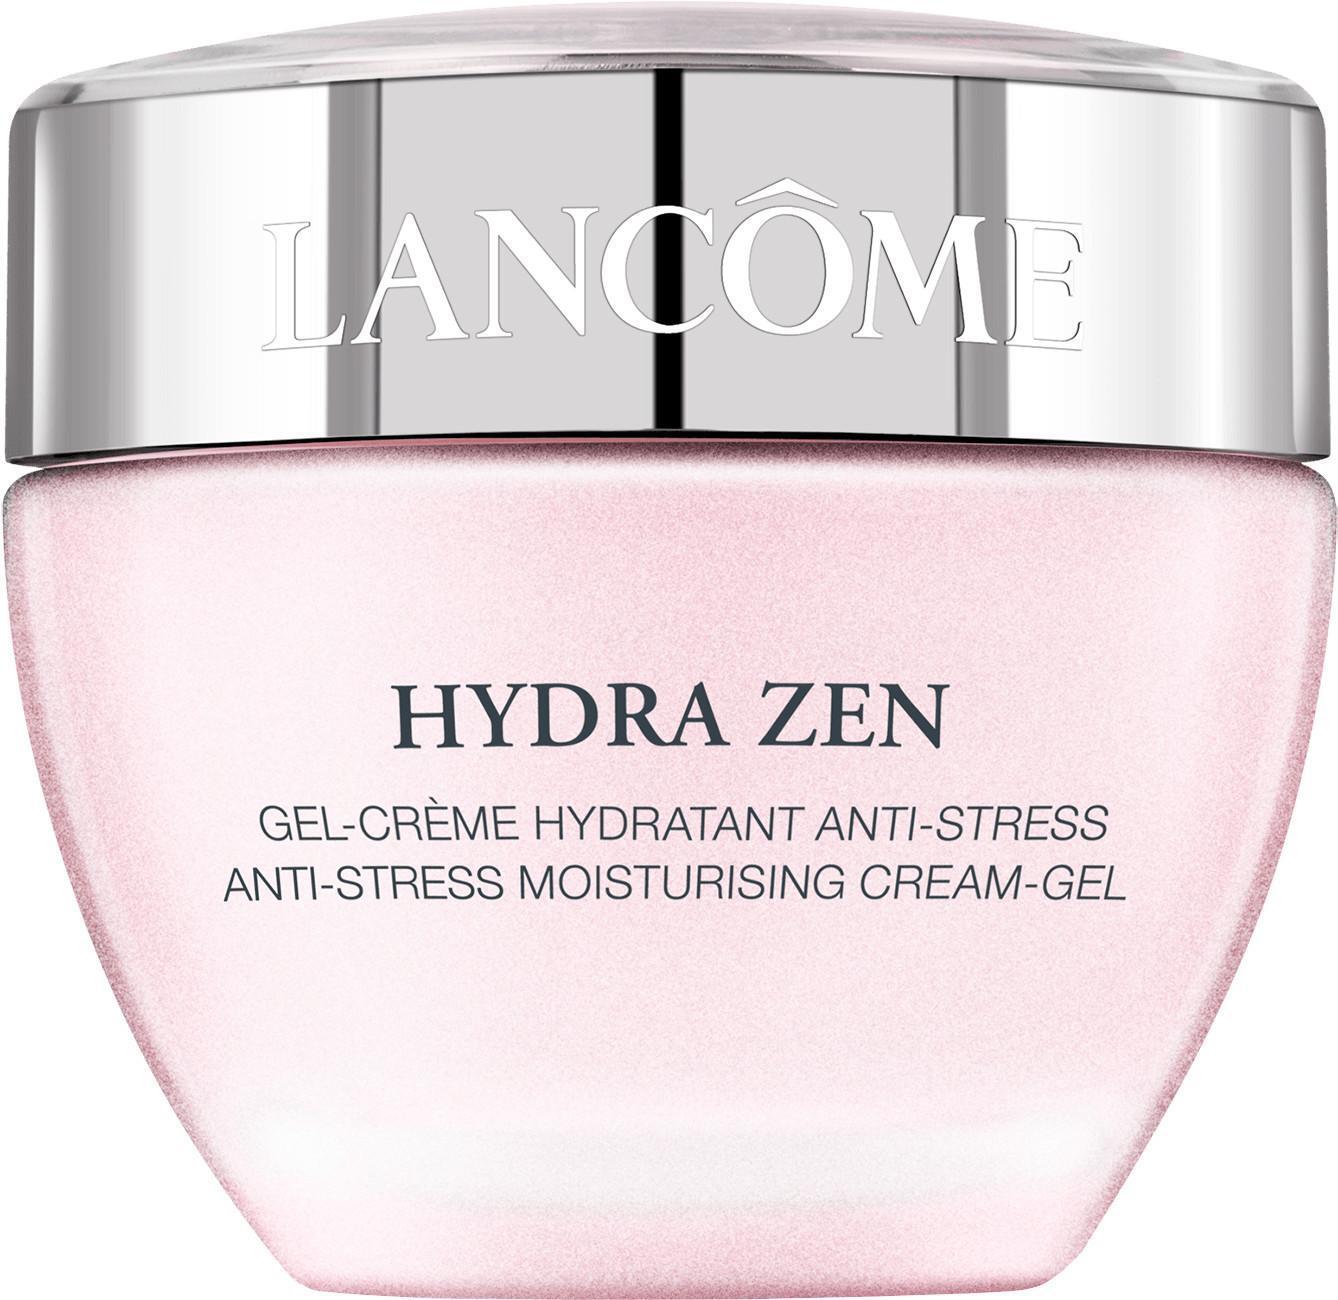 Lancome Hydra Zen Anti-Stress Moisturising cream-gel Хидратиращ и успокояващ дневен крем без опаковка